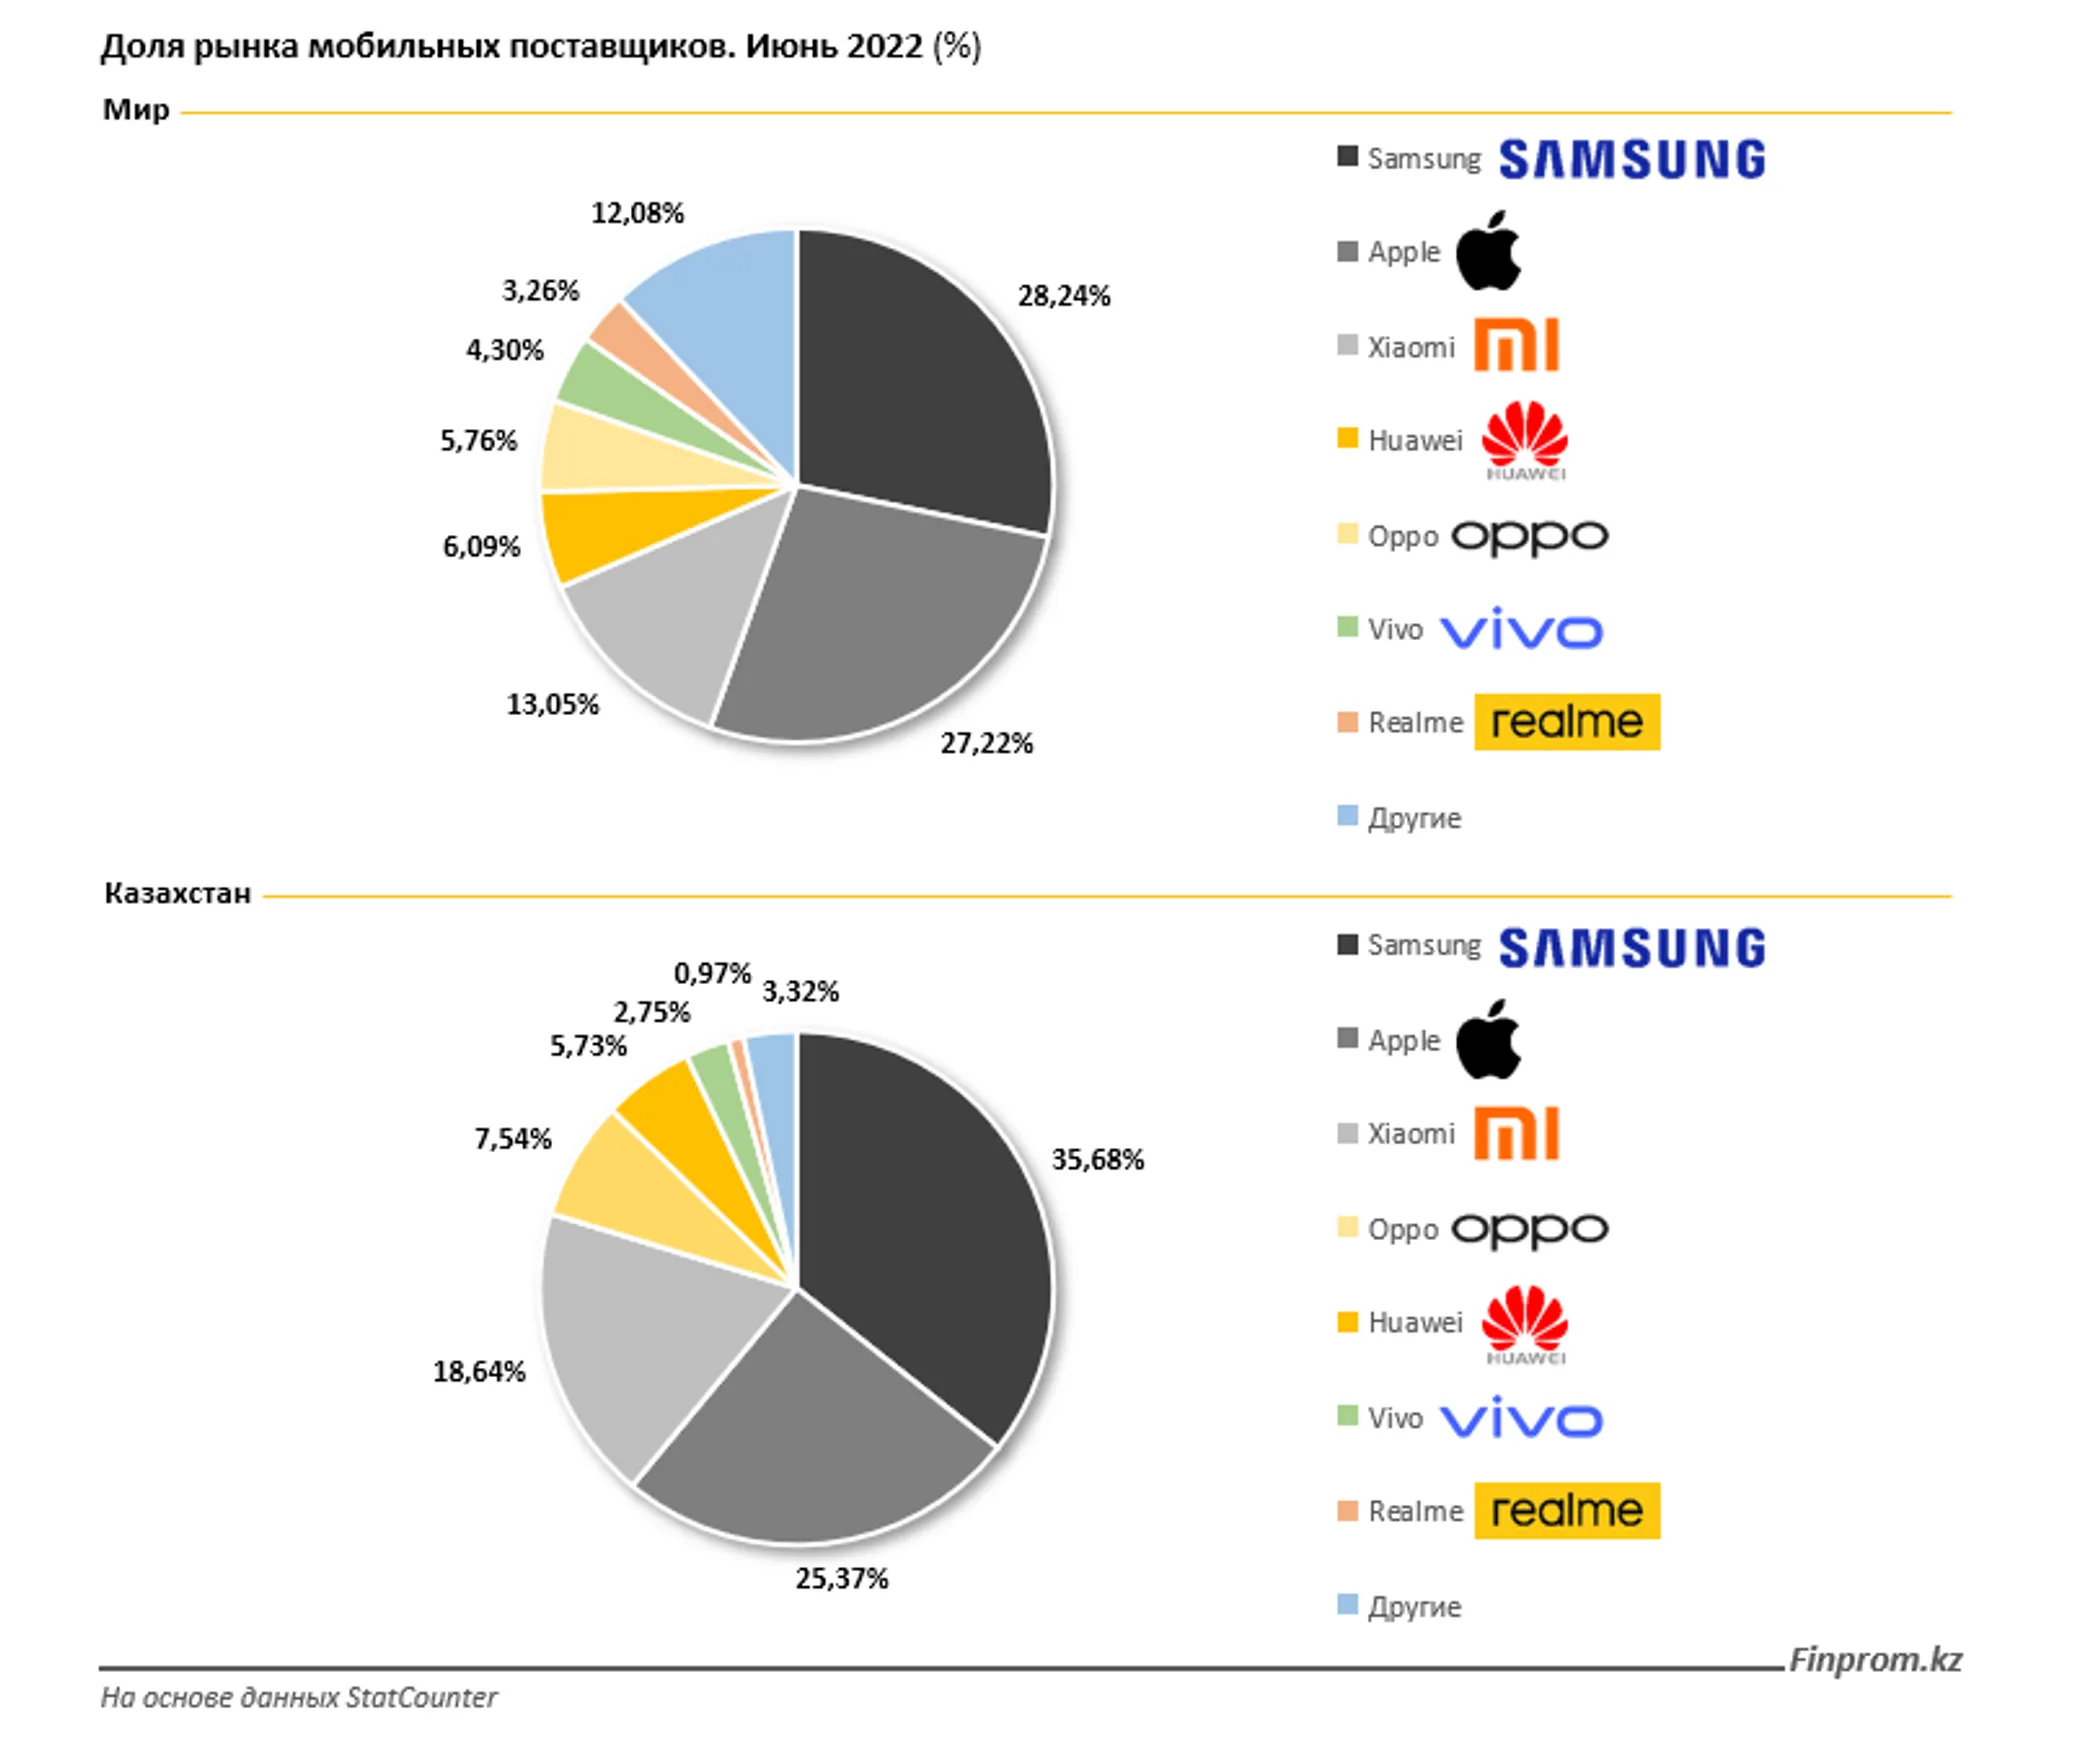 Mobile vendor market share as of June 2022, comparing global trend (top) with Kazakhstan (bottom). Credit: finprom.kz